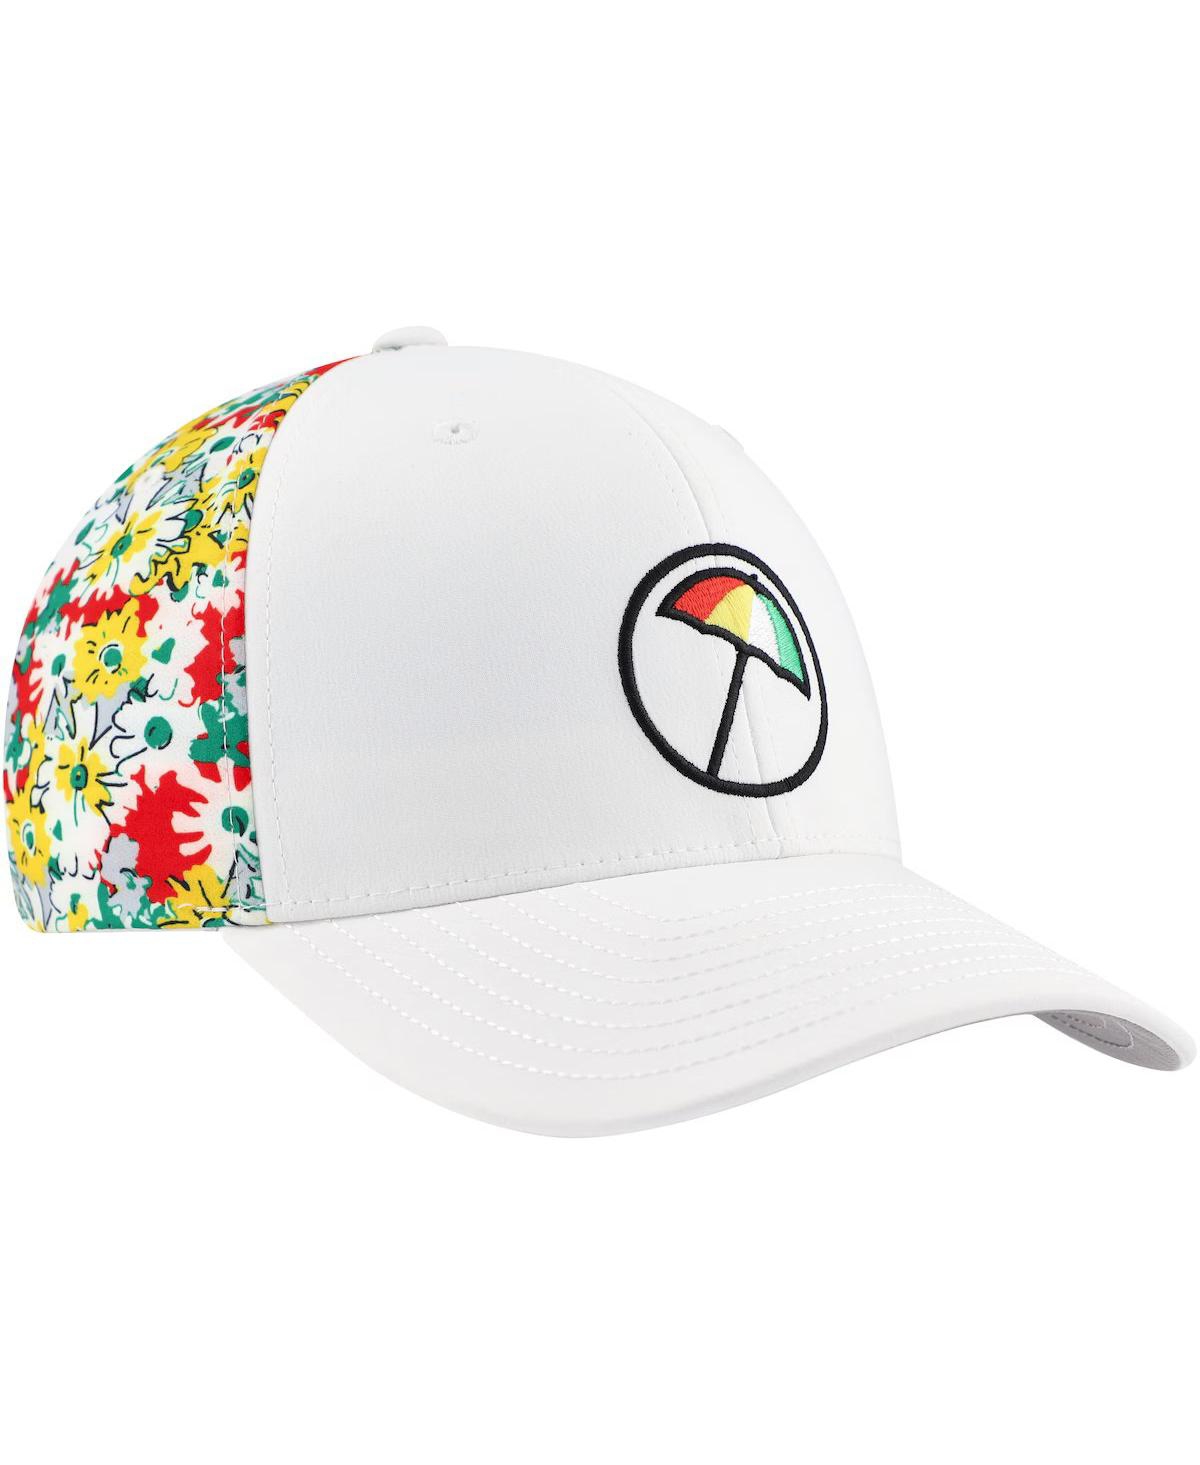 Men's White Arnold Palmer Invitational Floral Tech Flexfit Adjustable Hat - White